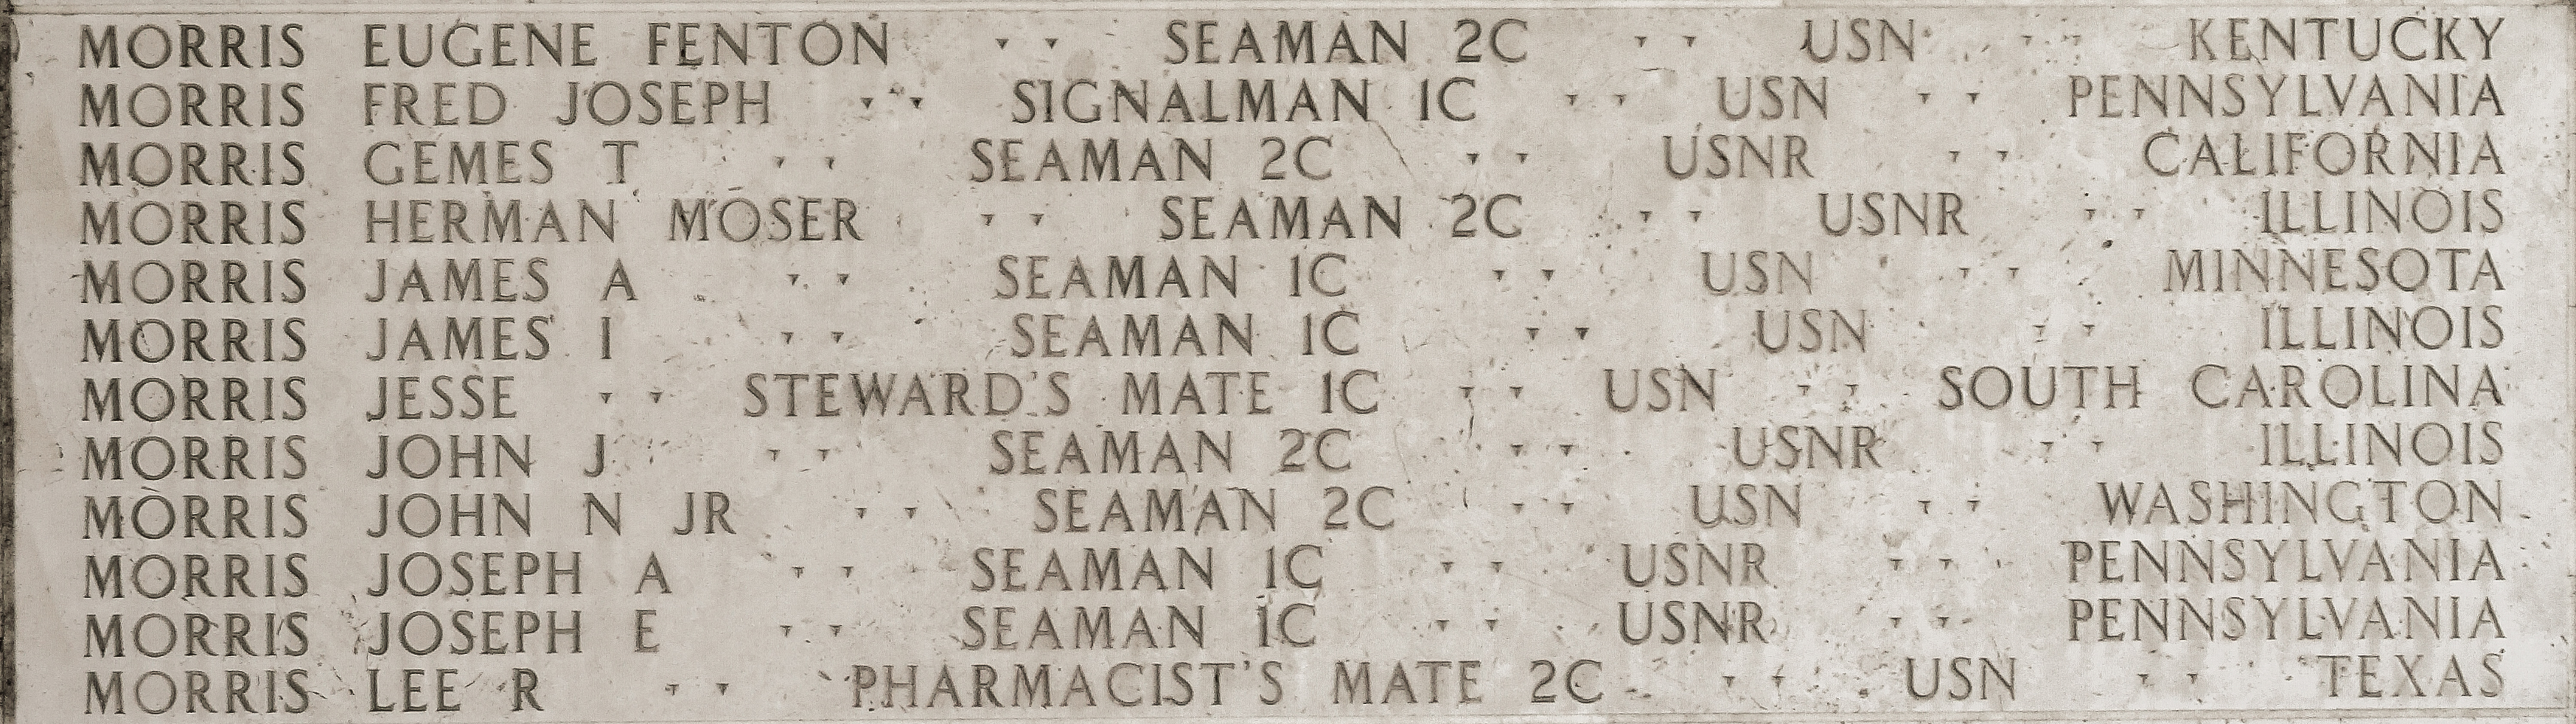 Herman Moser Morris, Seaman Second Class